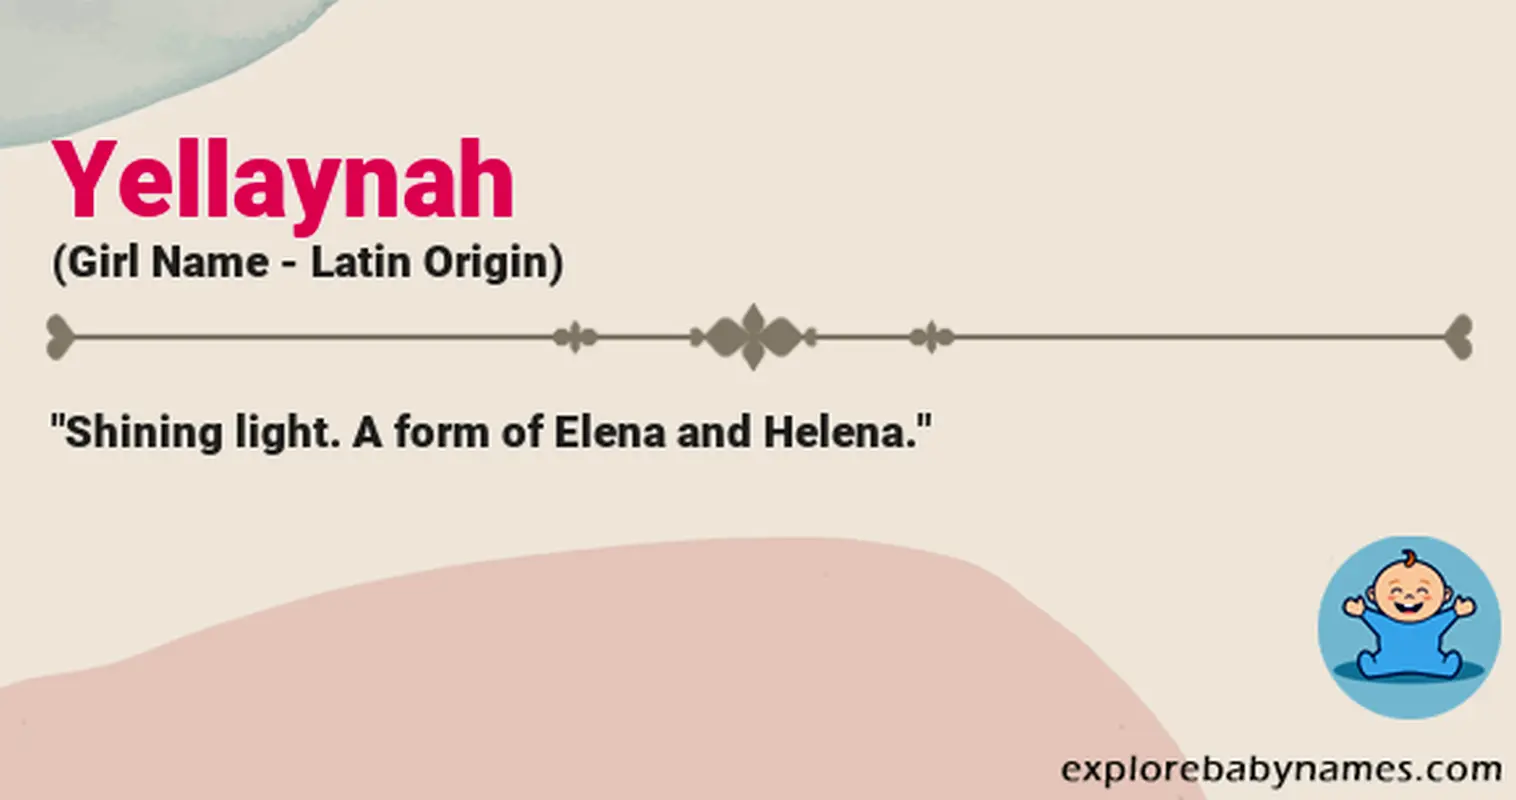 Meaning of Yellaynah